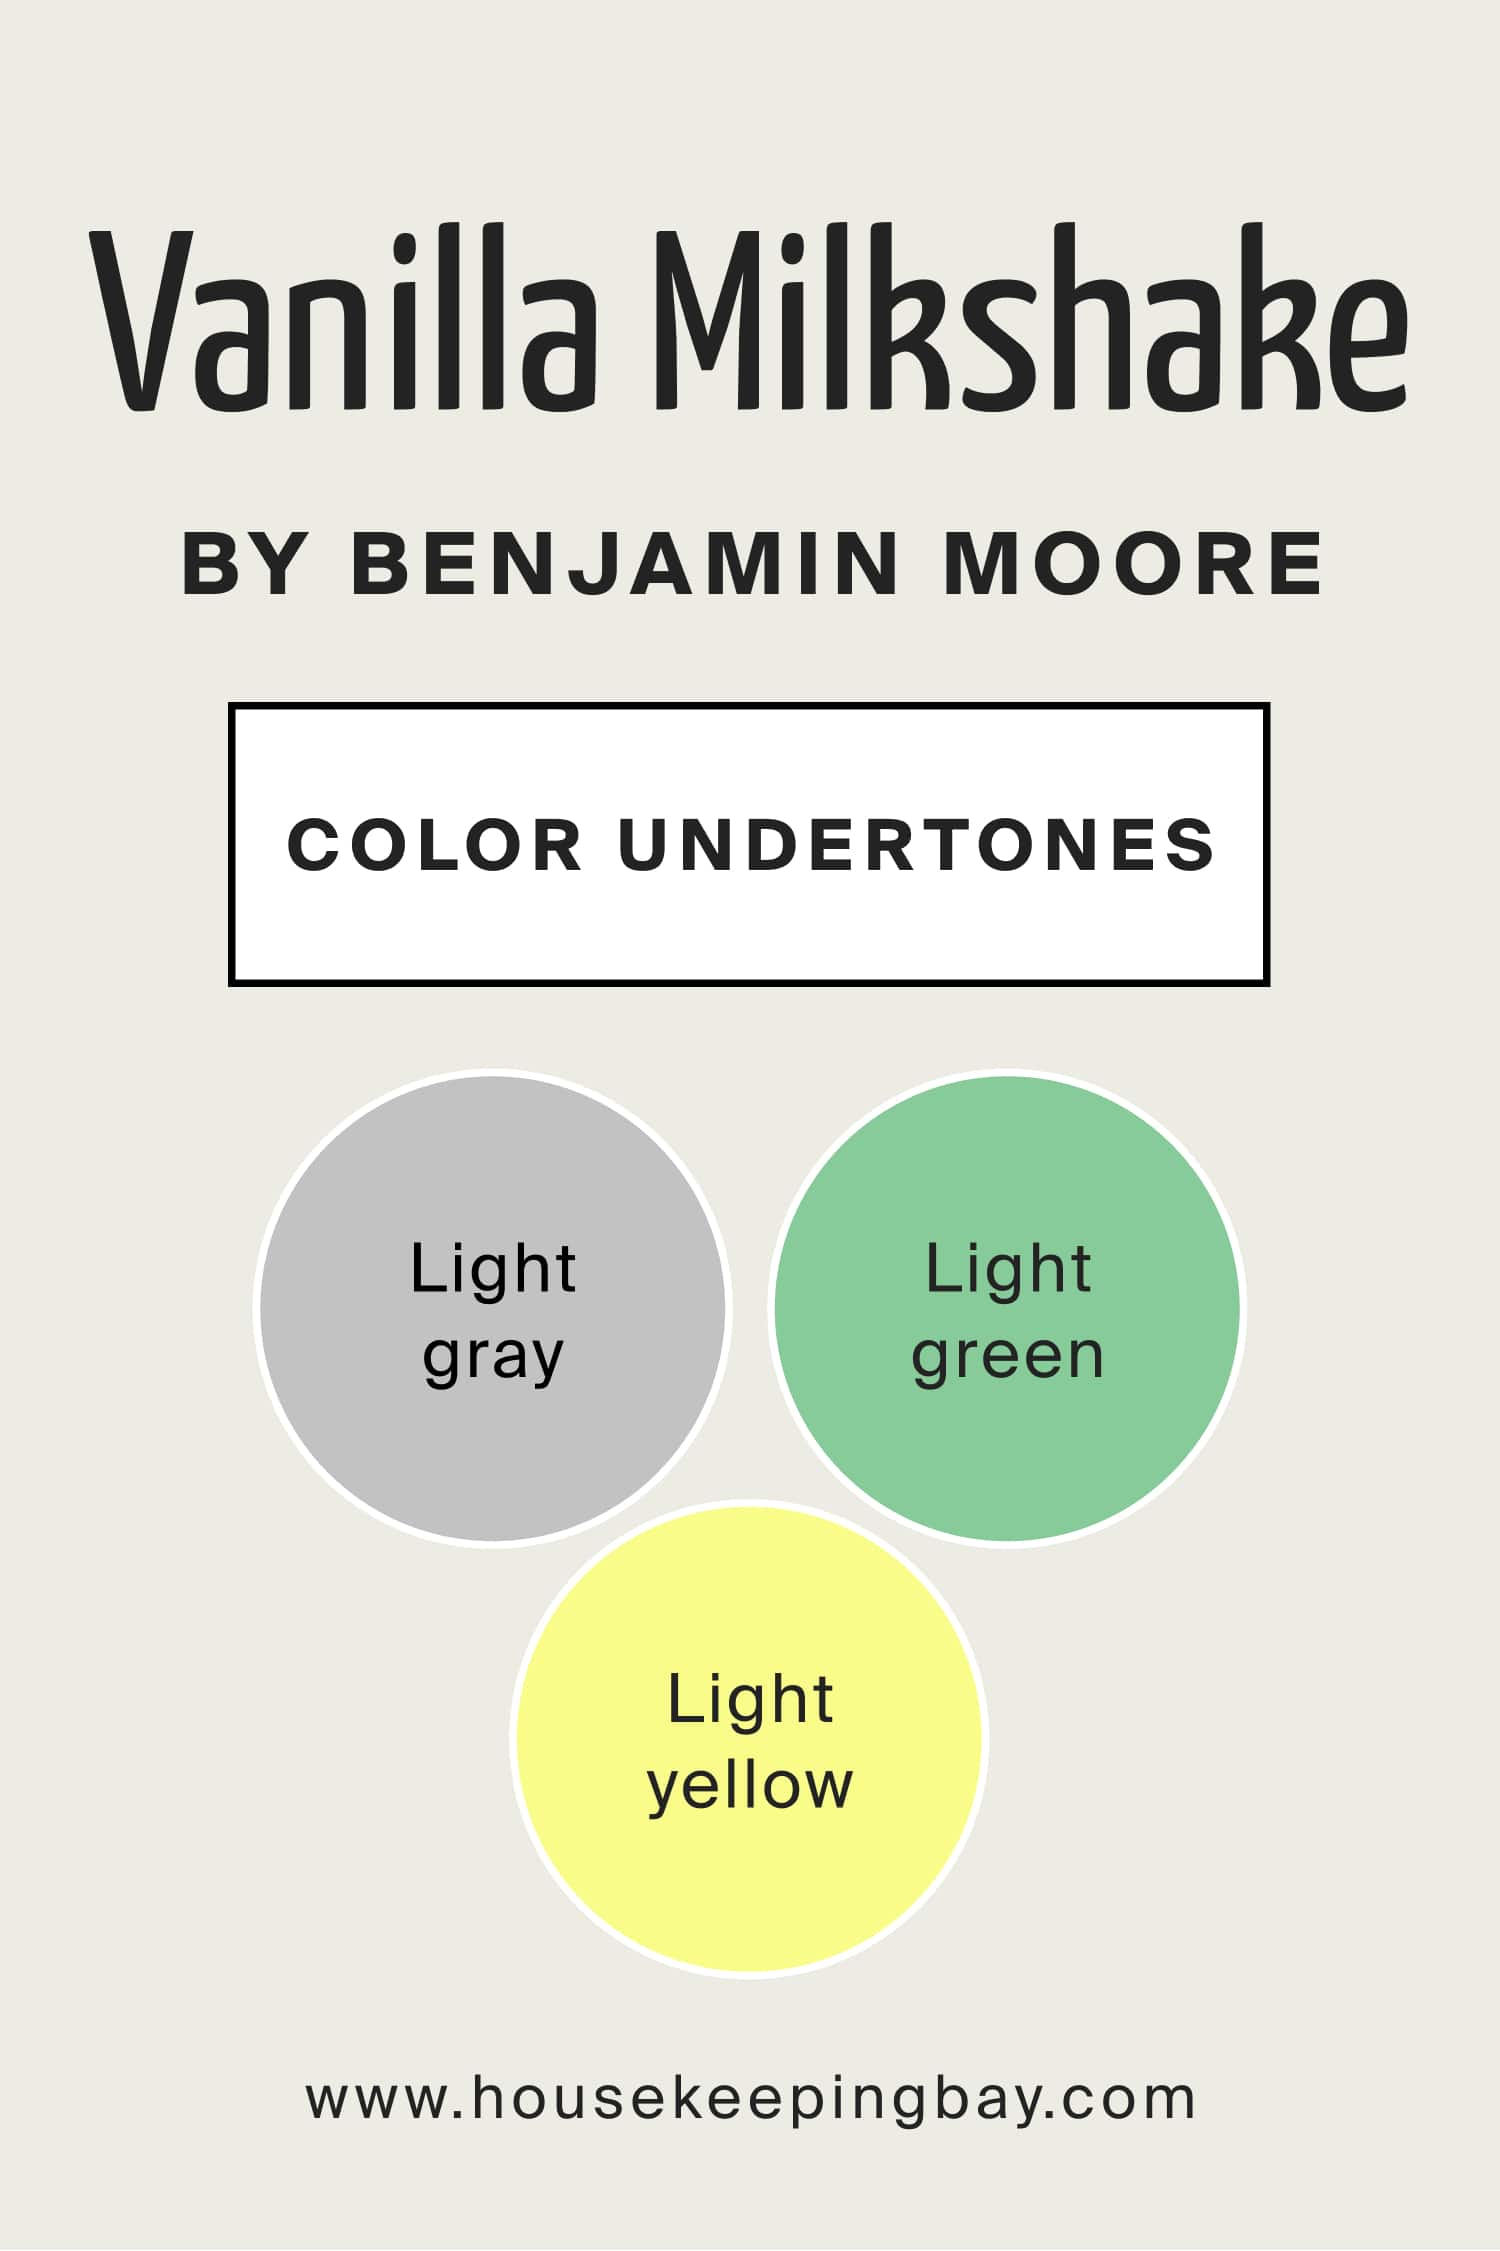 Vanilla Milkshake 2141 70 by Benjamin Moore Color Undertones